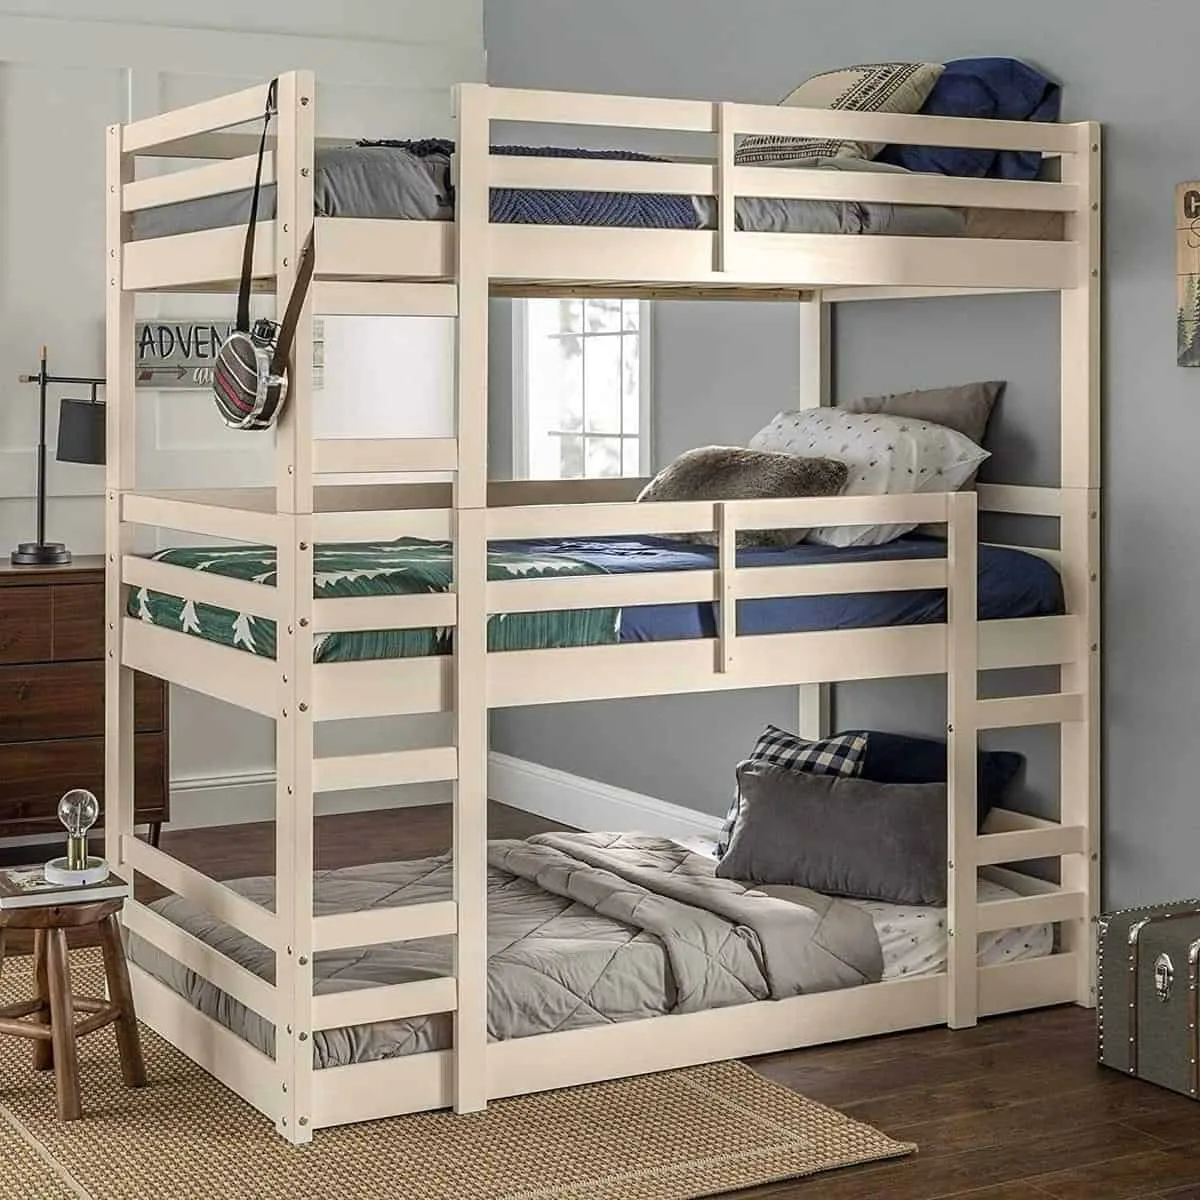 Bedroom furniture with triple sleeper